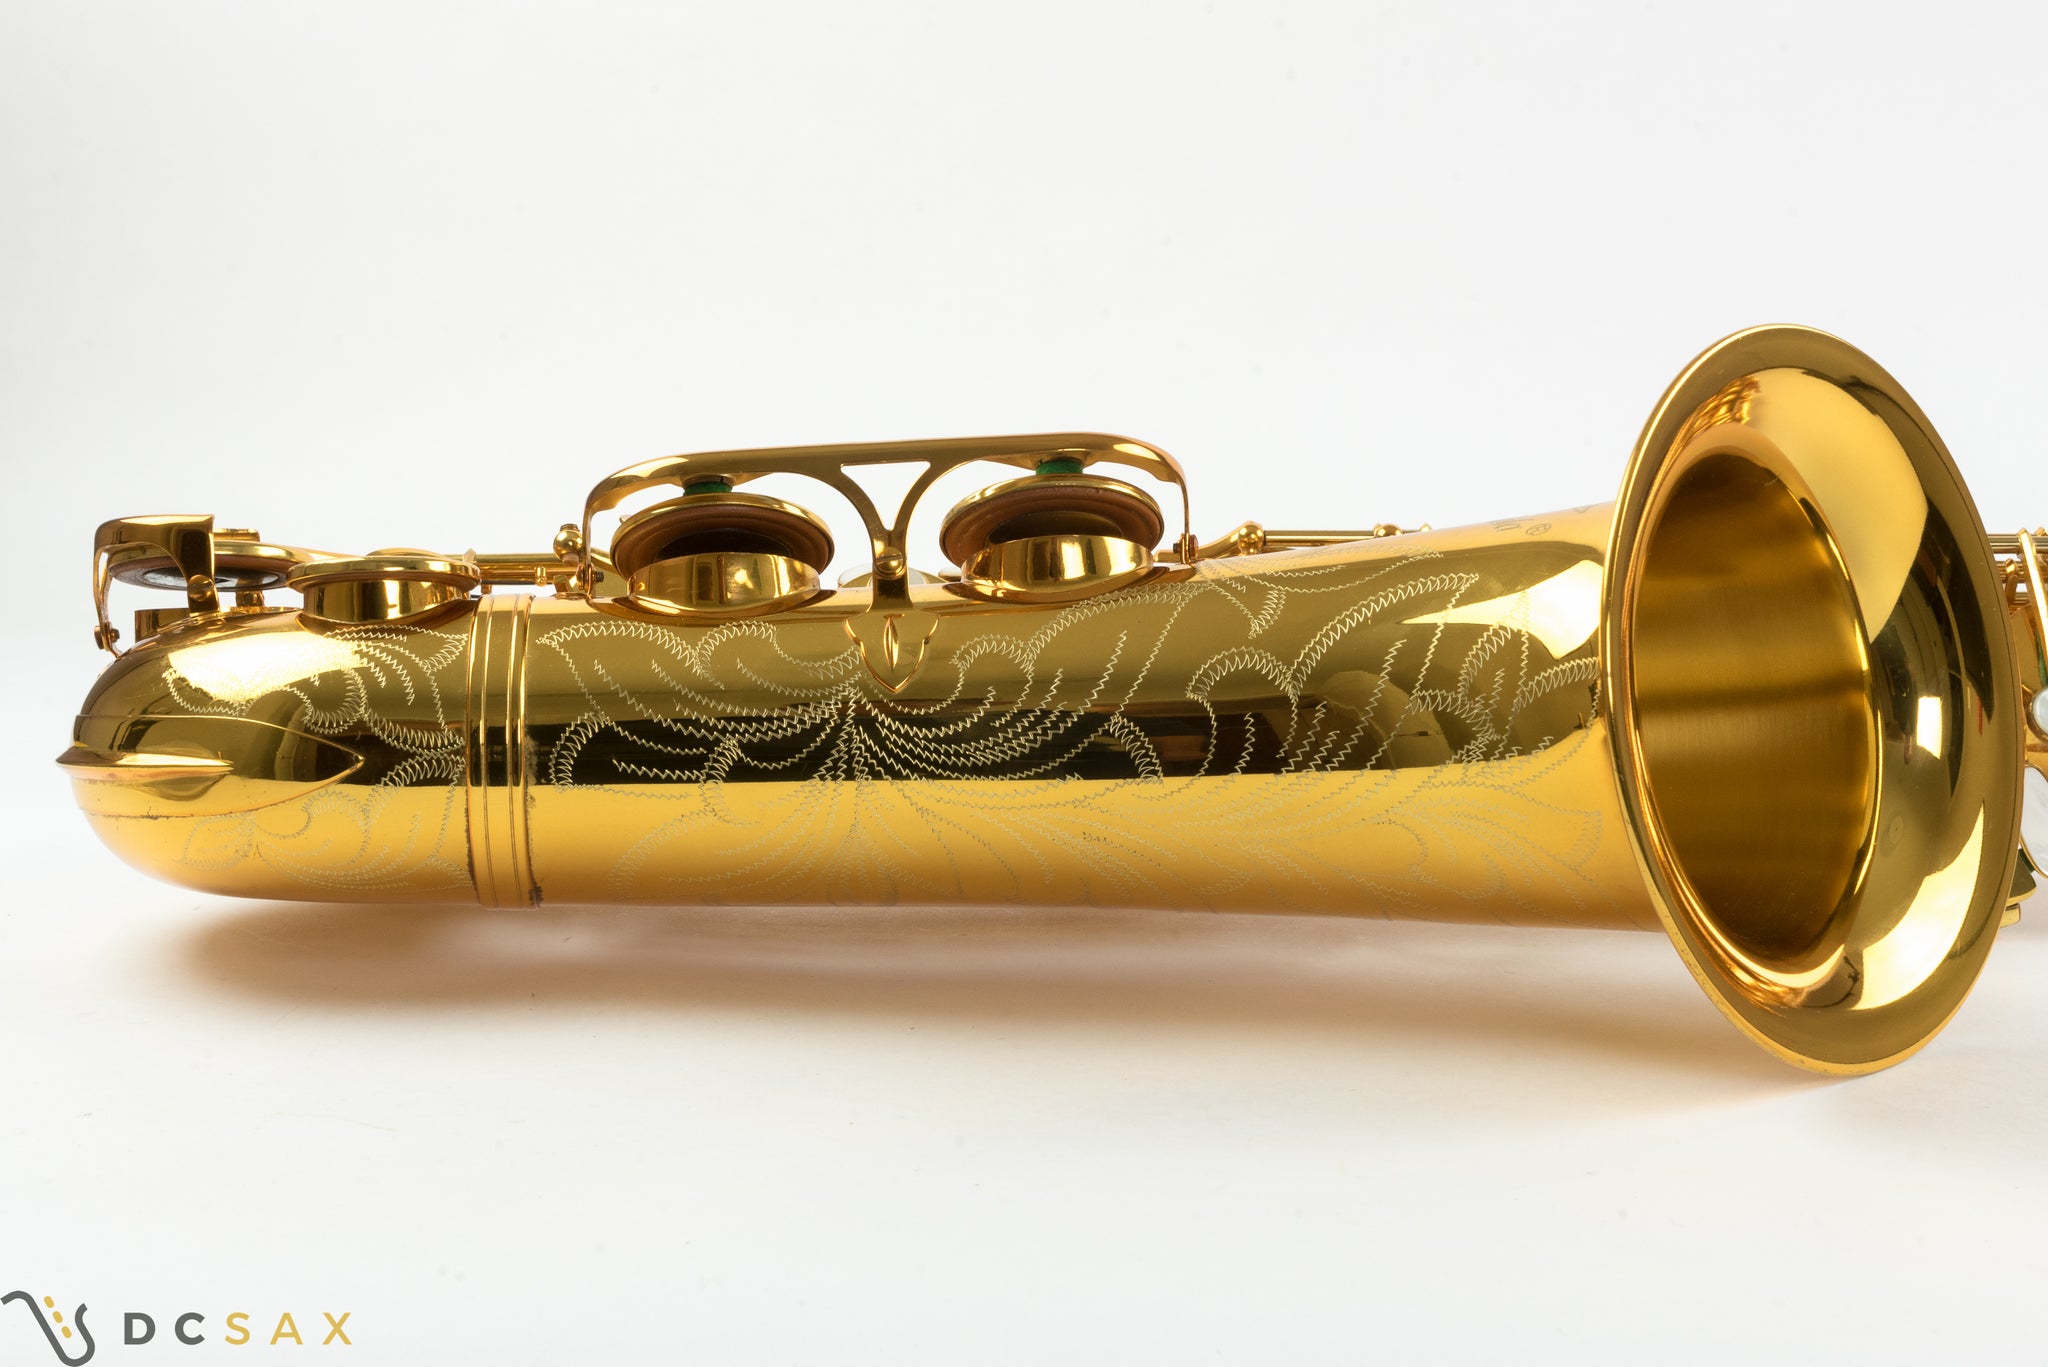 Dave Guardala Tenor Saxophone, Gold Plated, Video